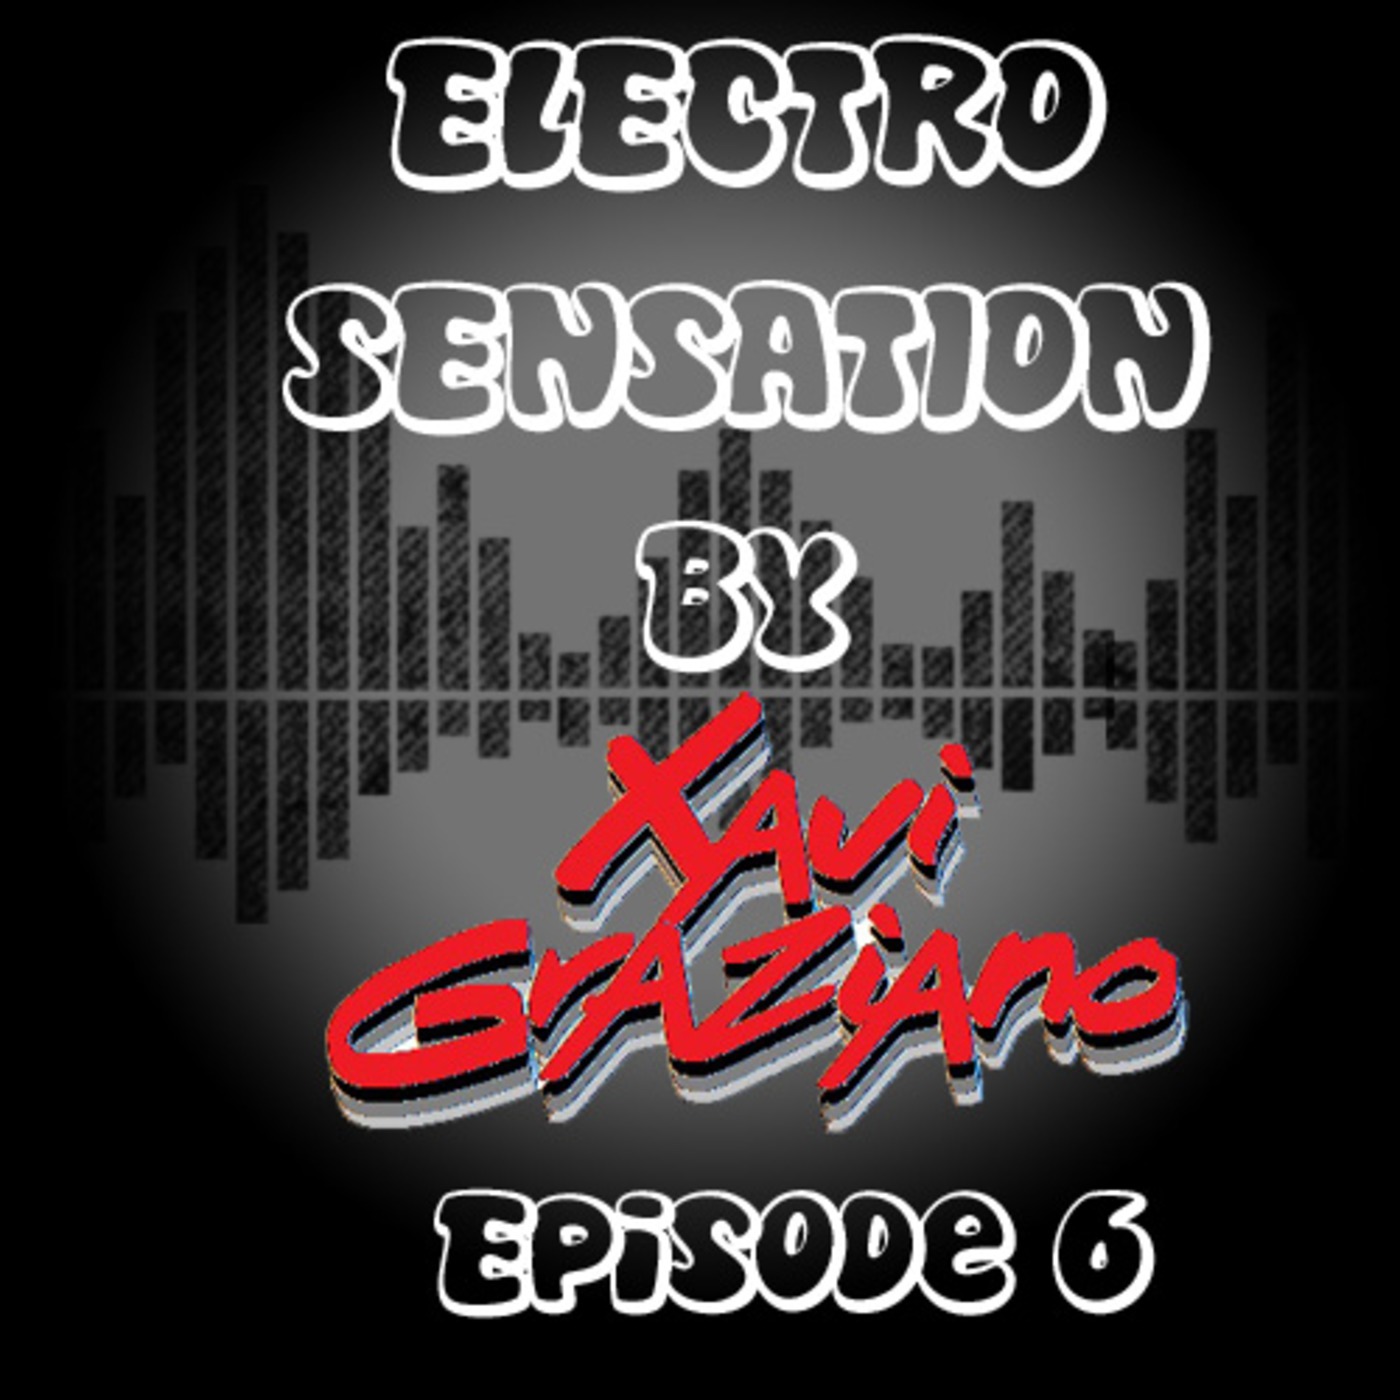 Episode 6 - Electro Sensation by Xavi Graziano